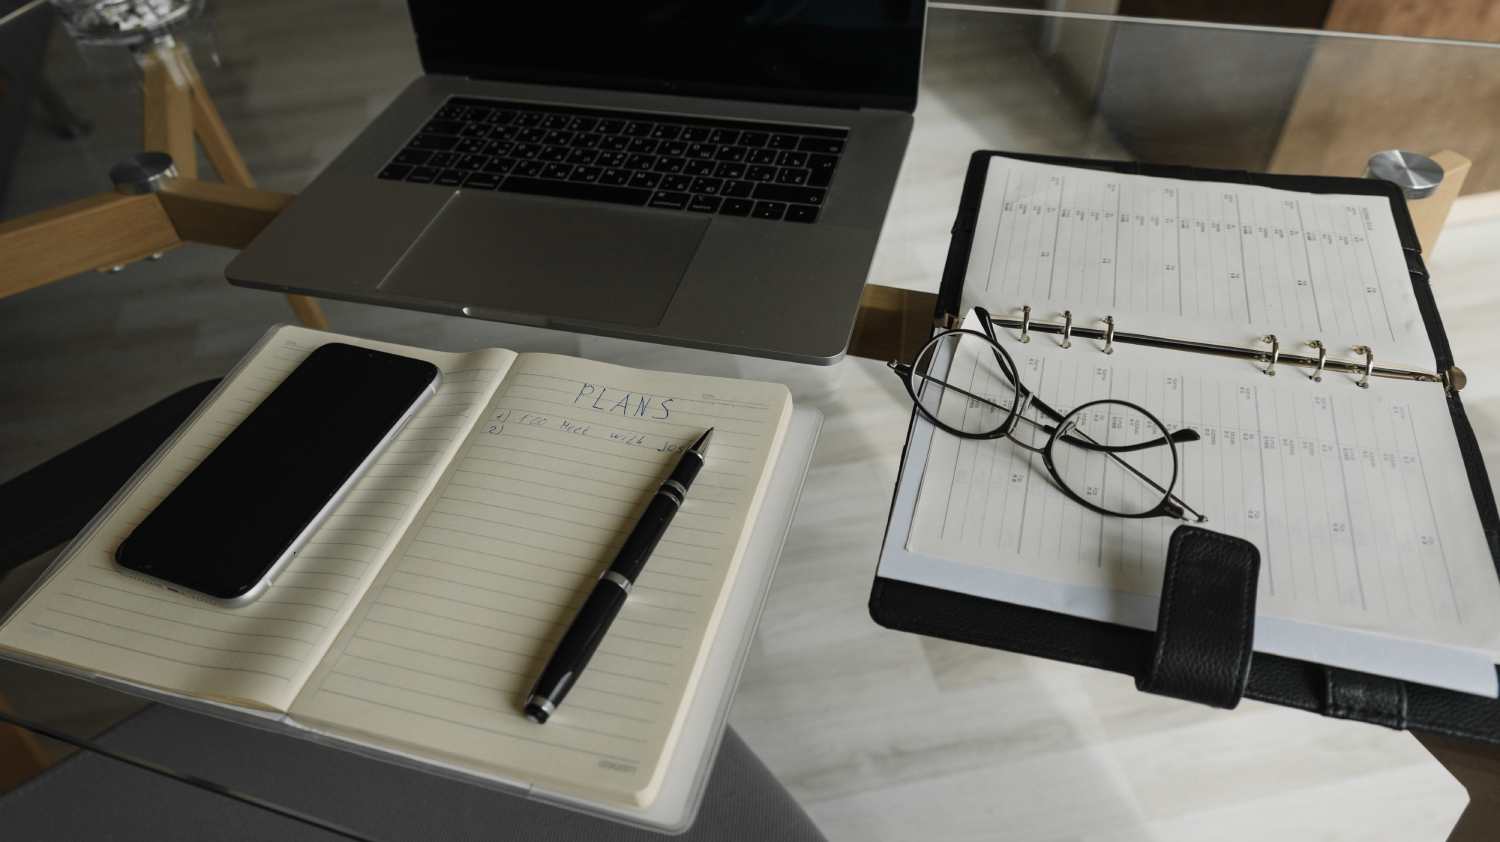 Laptop, Diary & Pen kept on Table